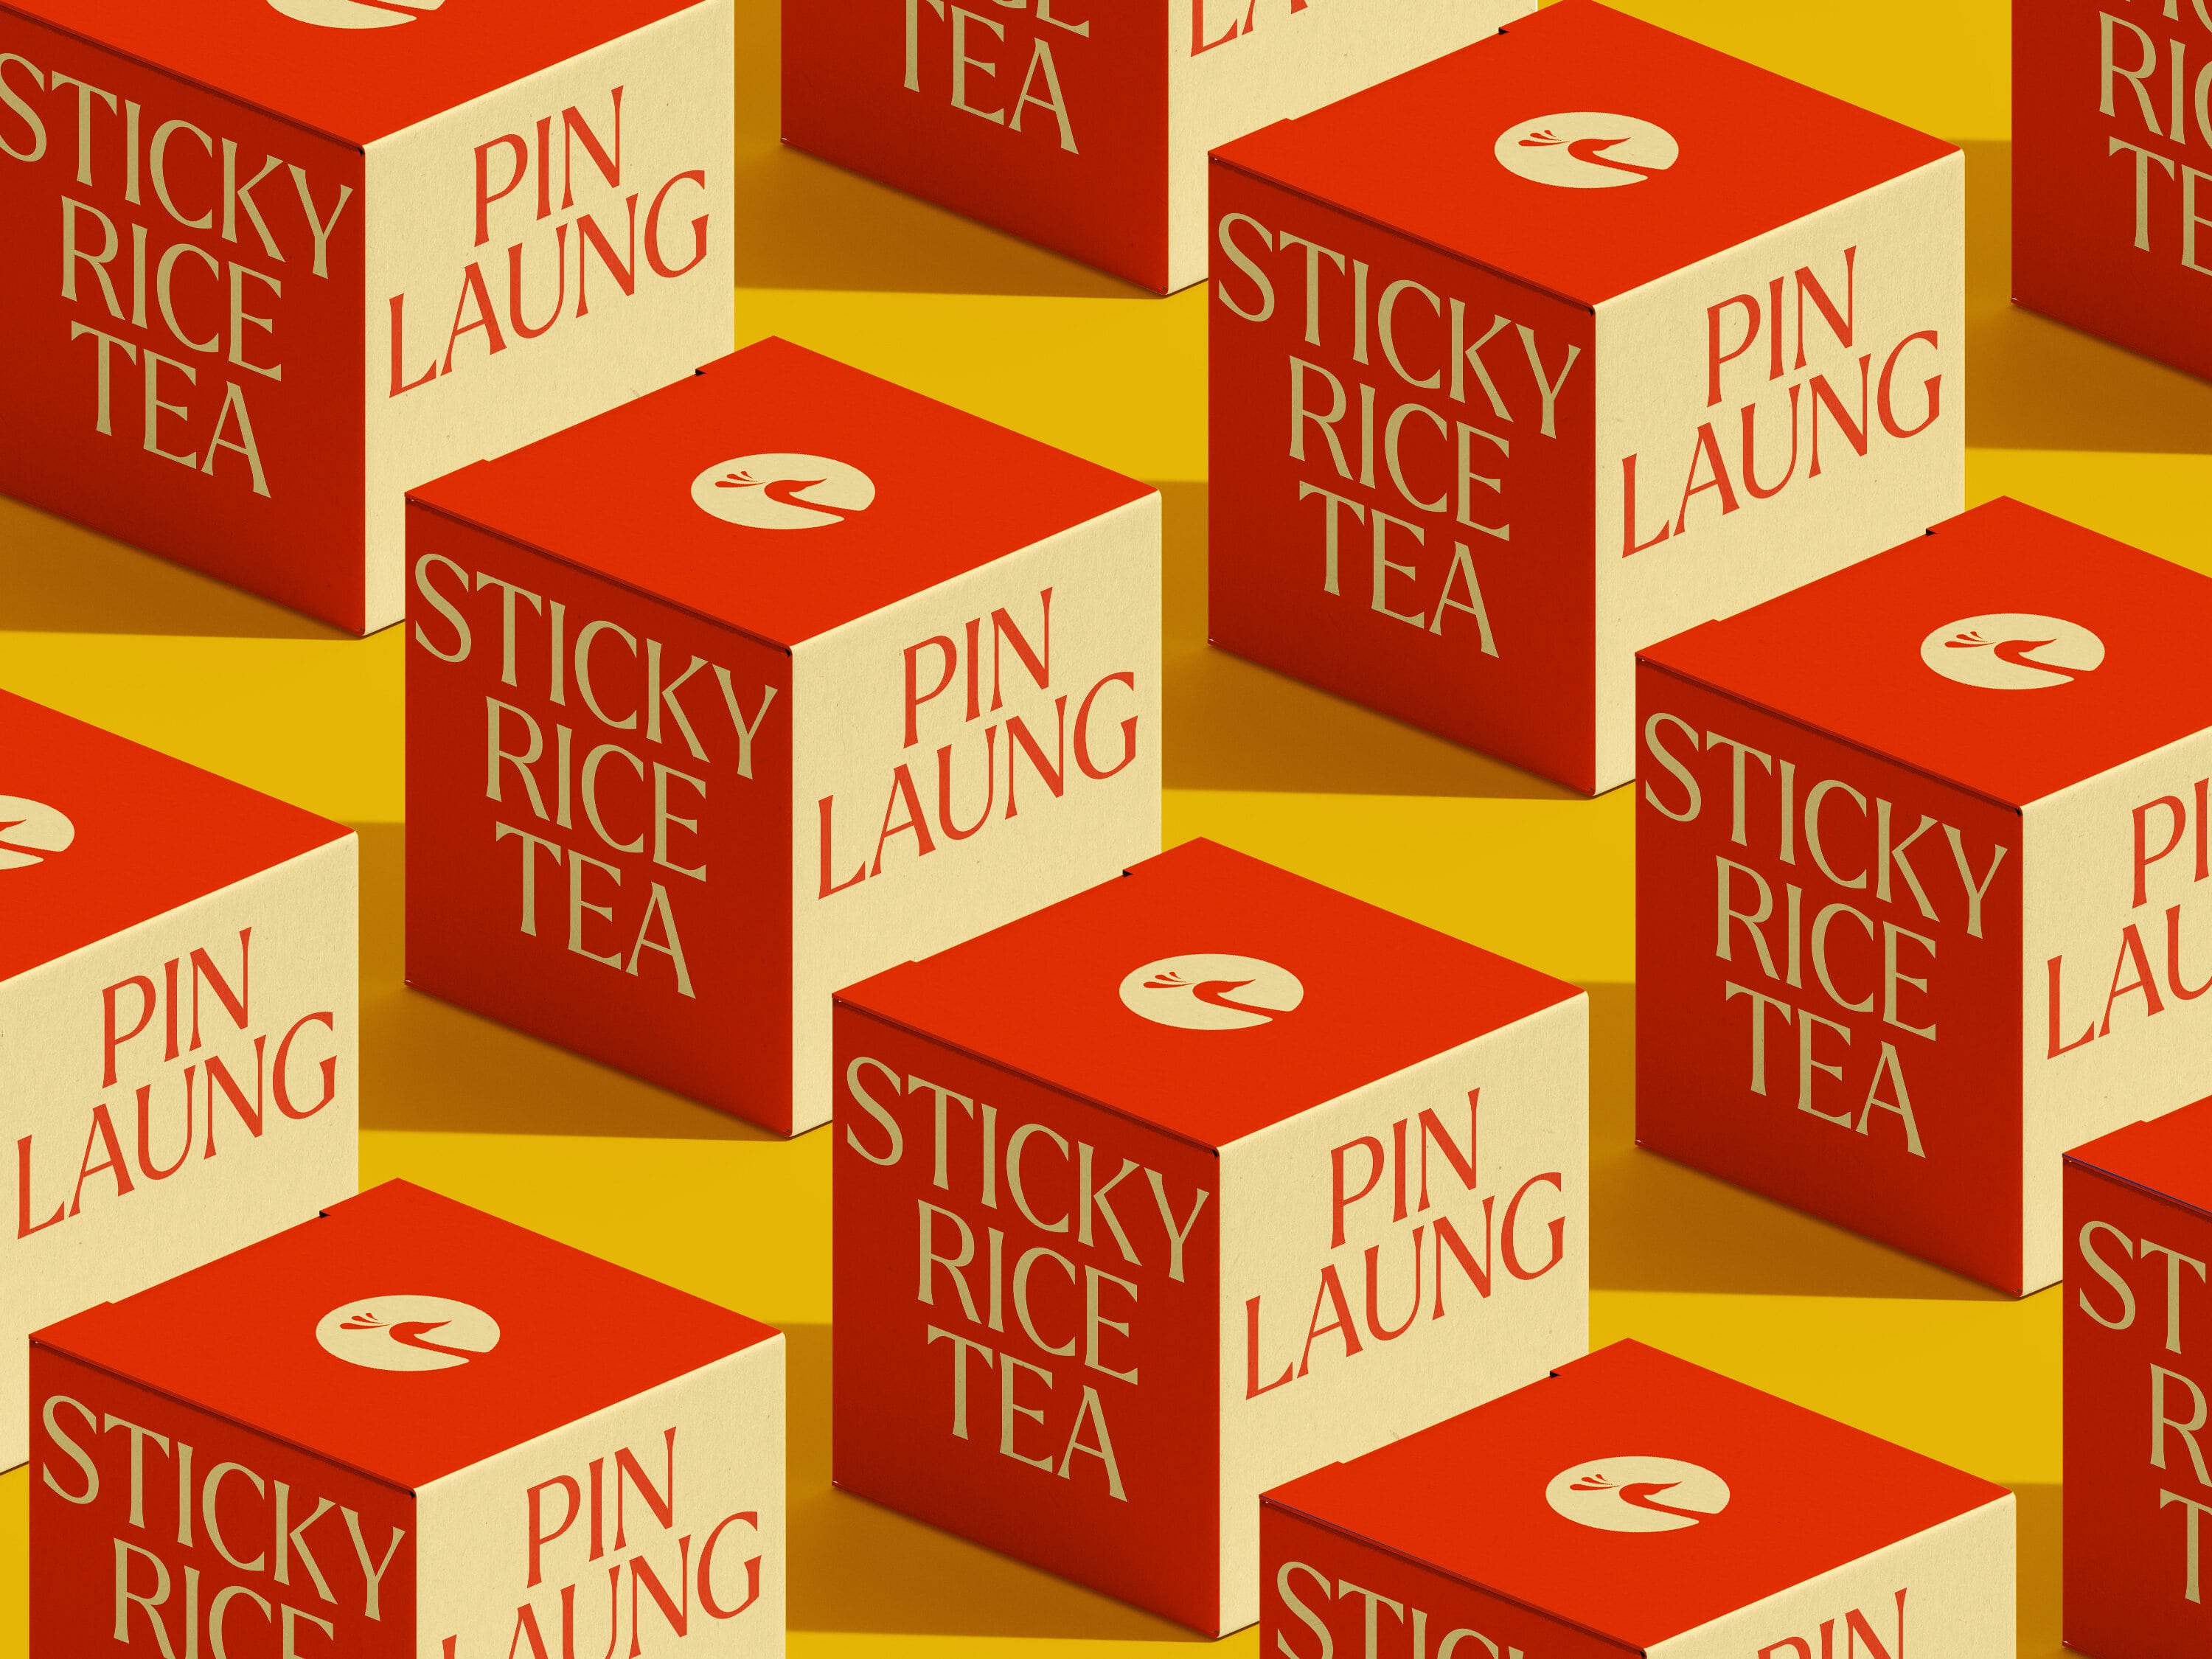 Pin Laung Tea Packaging Design